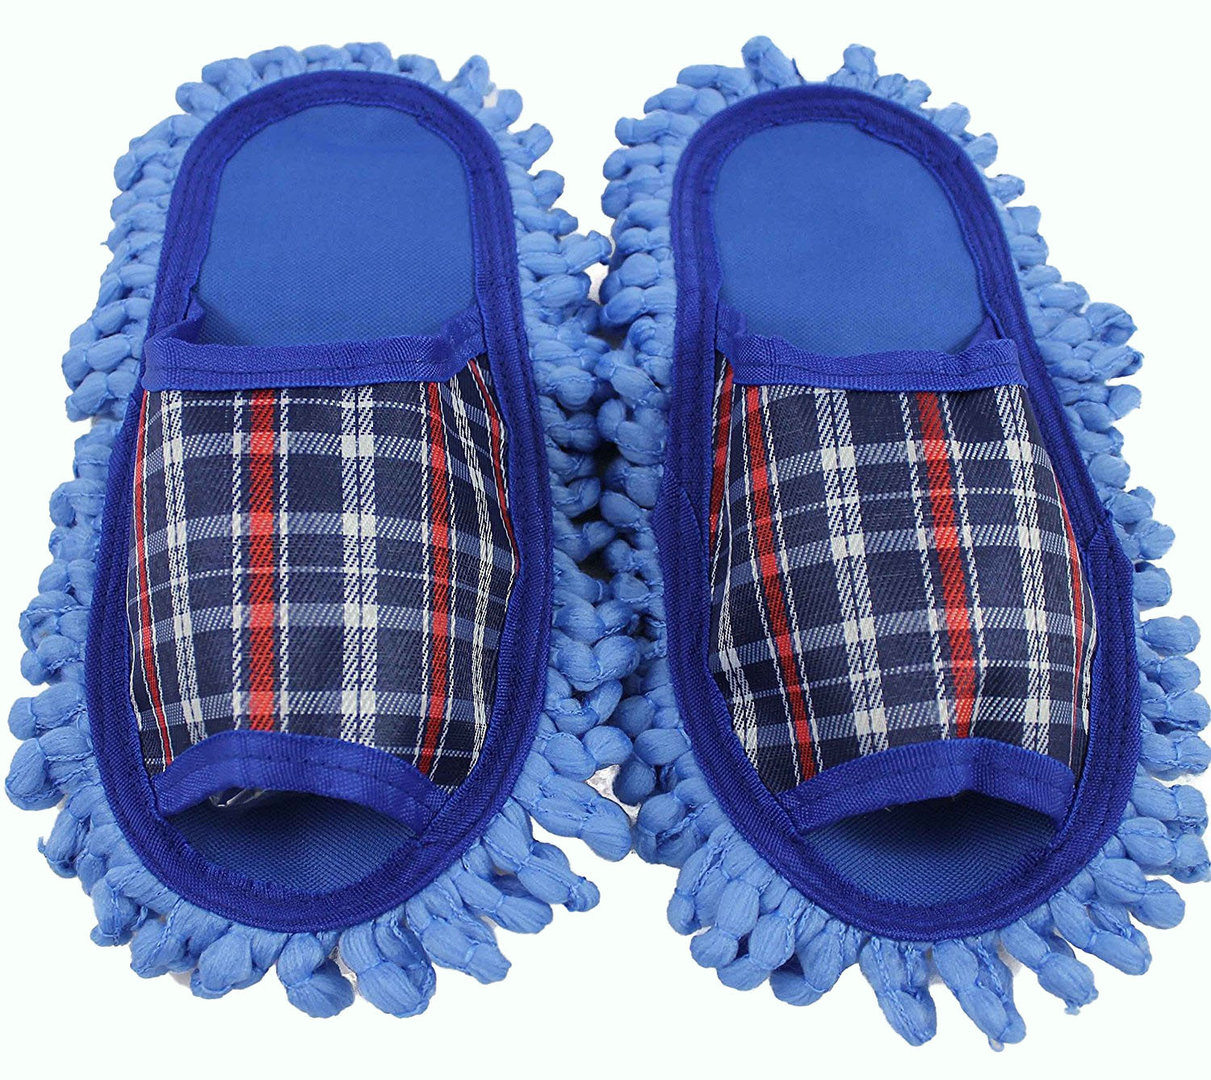 Hausschuhe Mop-Schuhe in blau rot Mikrofasser-sohle size 37-39 Unisex R-162